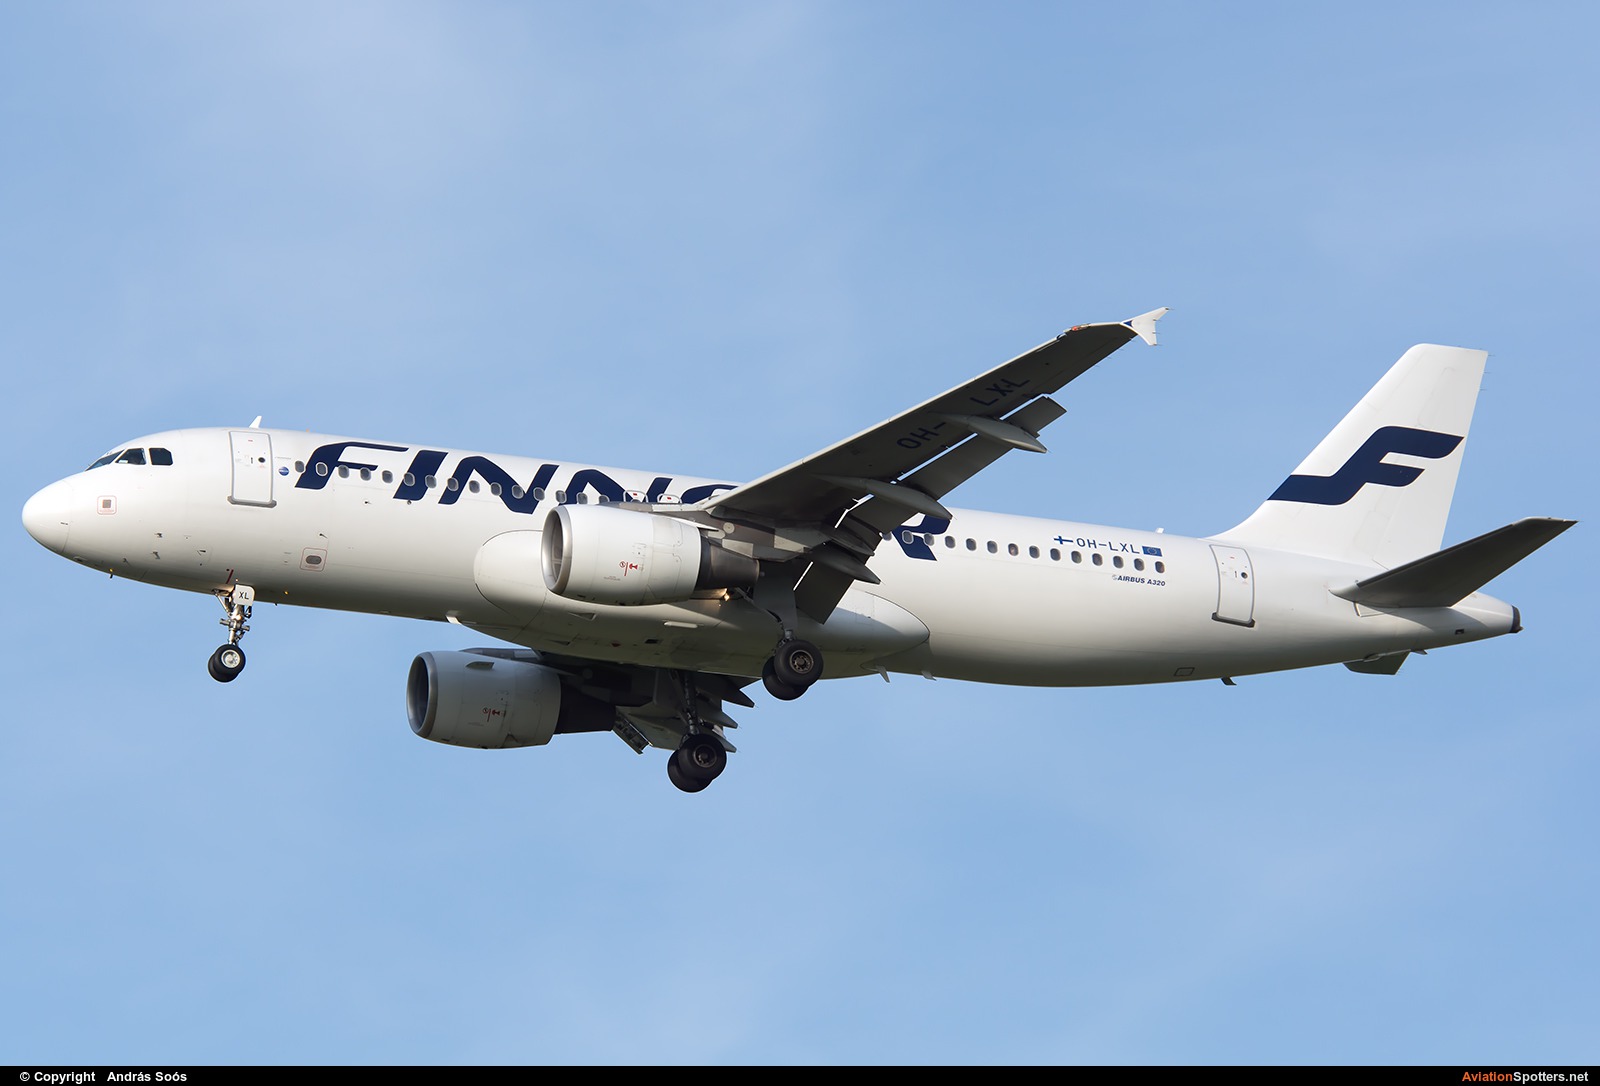 Finnair  -  A320  (OH-LXL) By András Soós (sas1965)